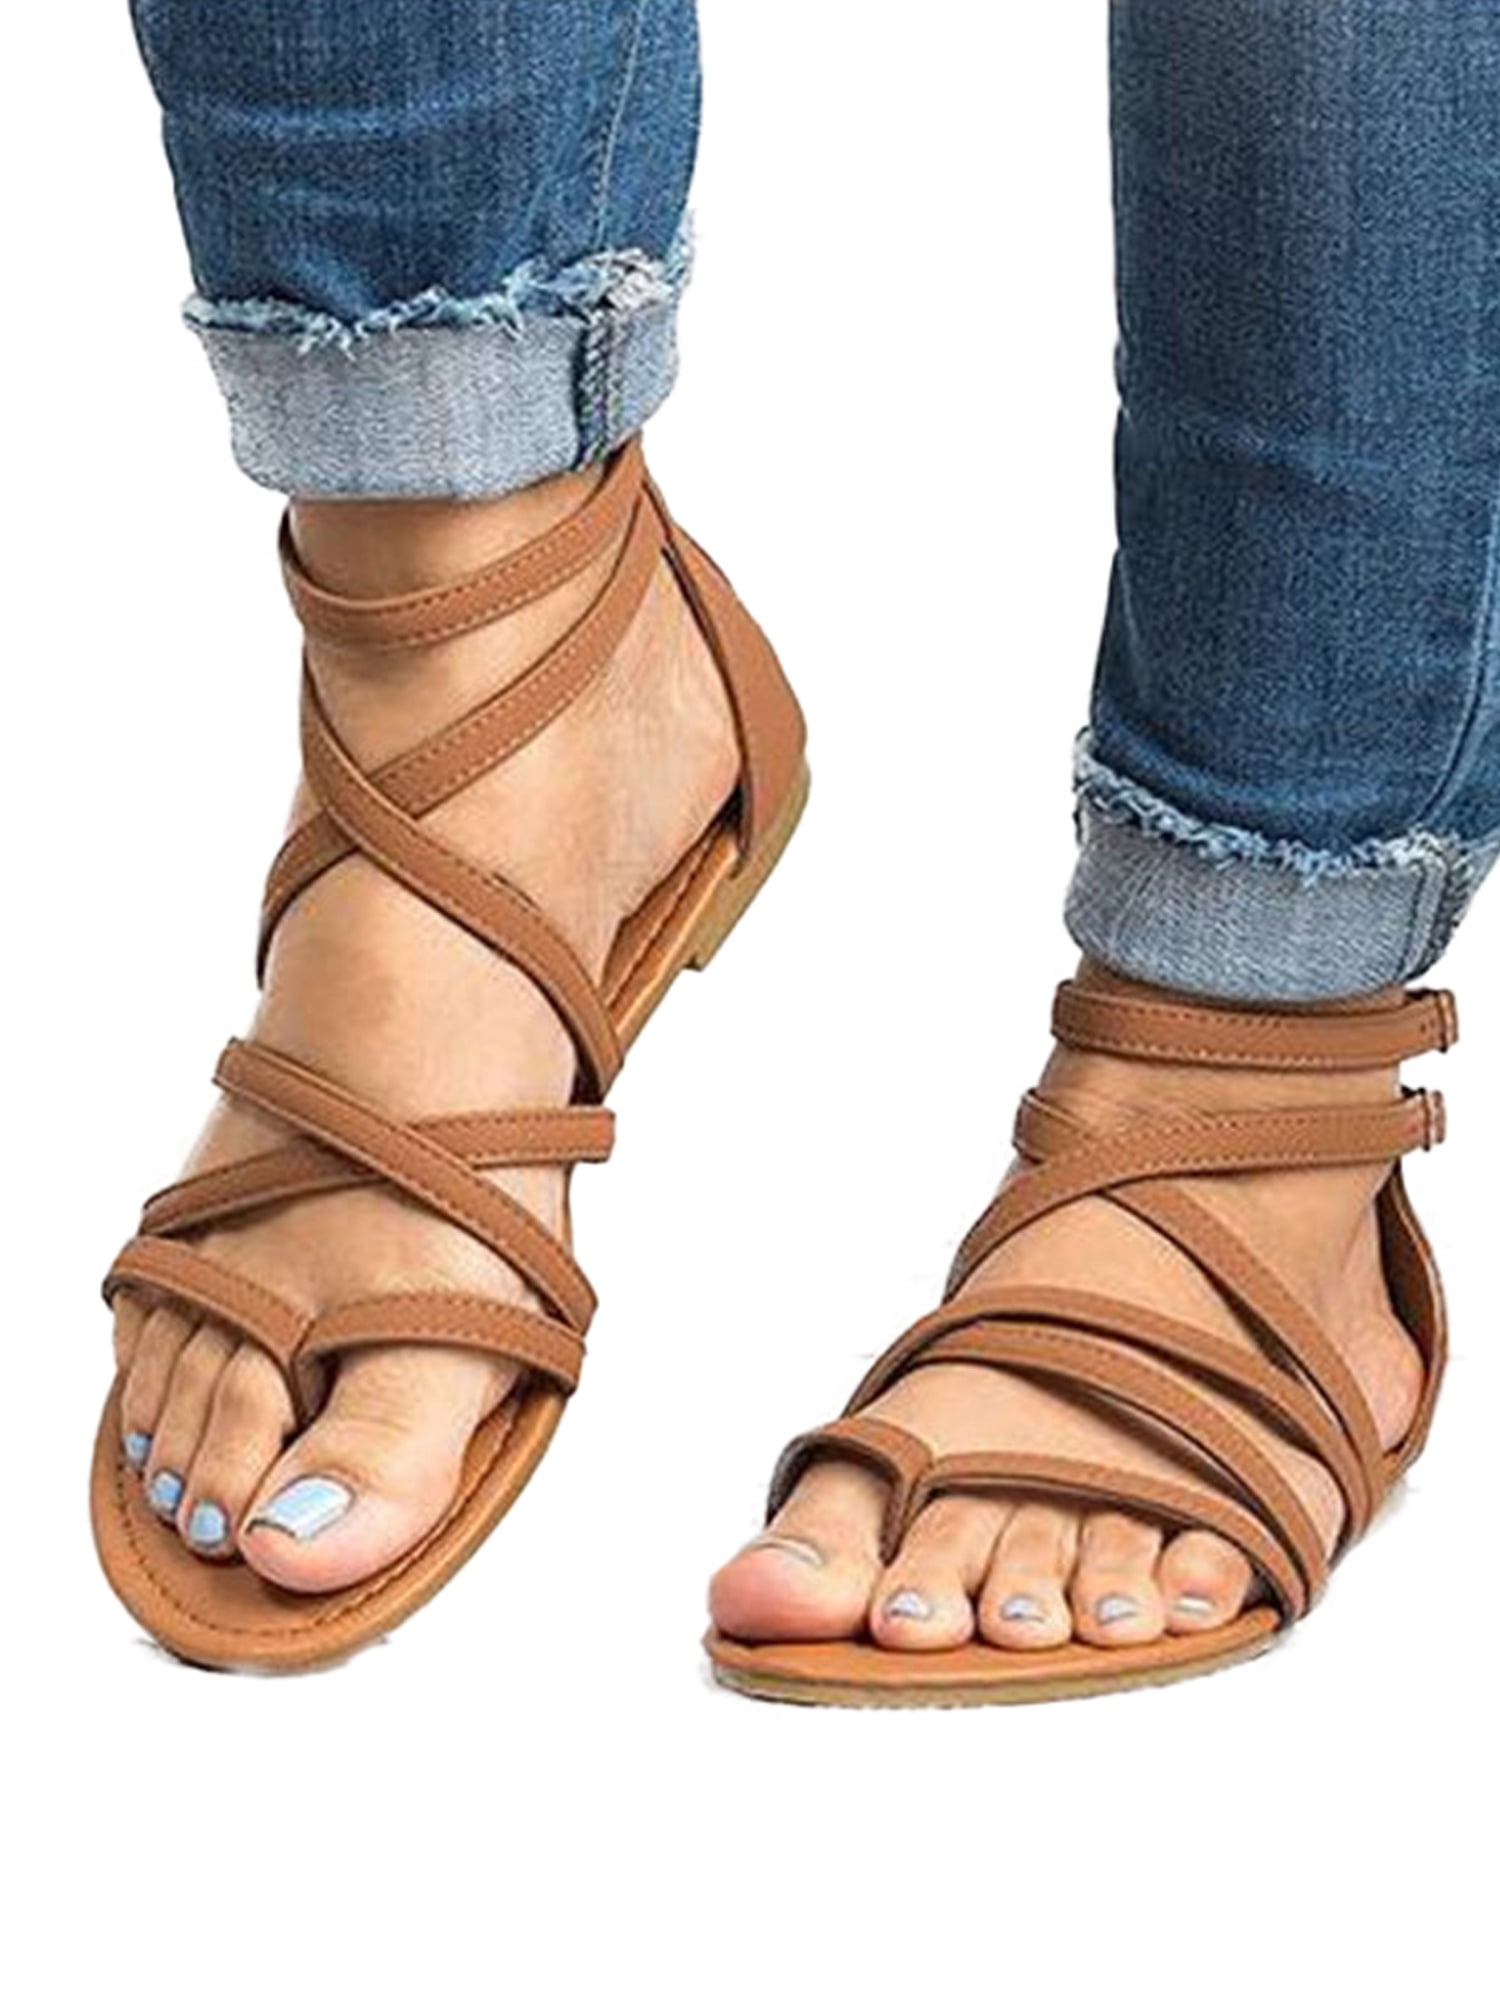 Women Sandals Flats Heels Gladiator Clip Toe Holiday Summer Zip Buckle Shoes D